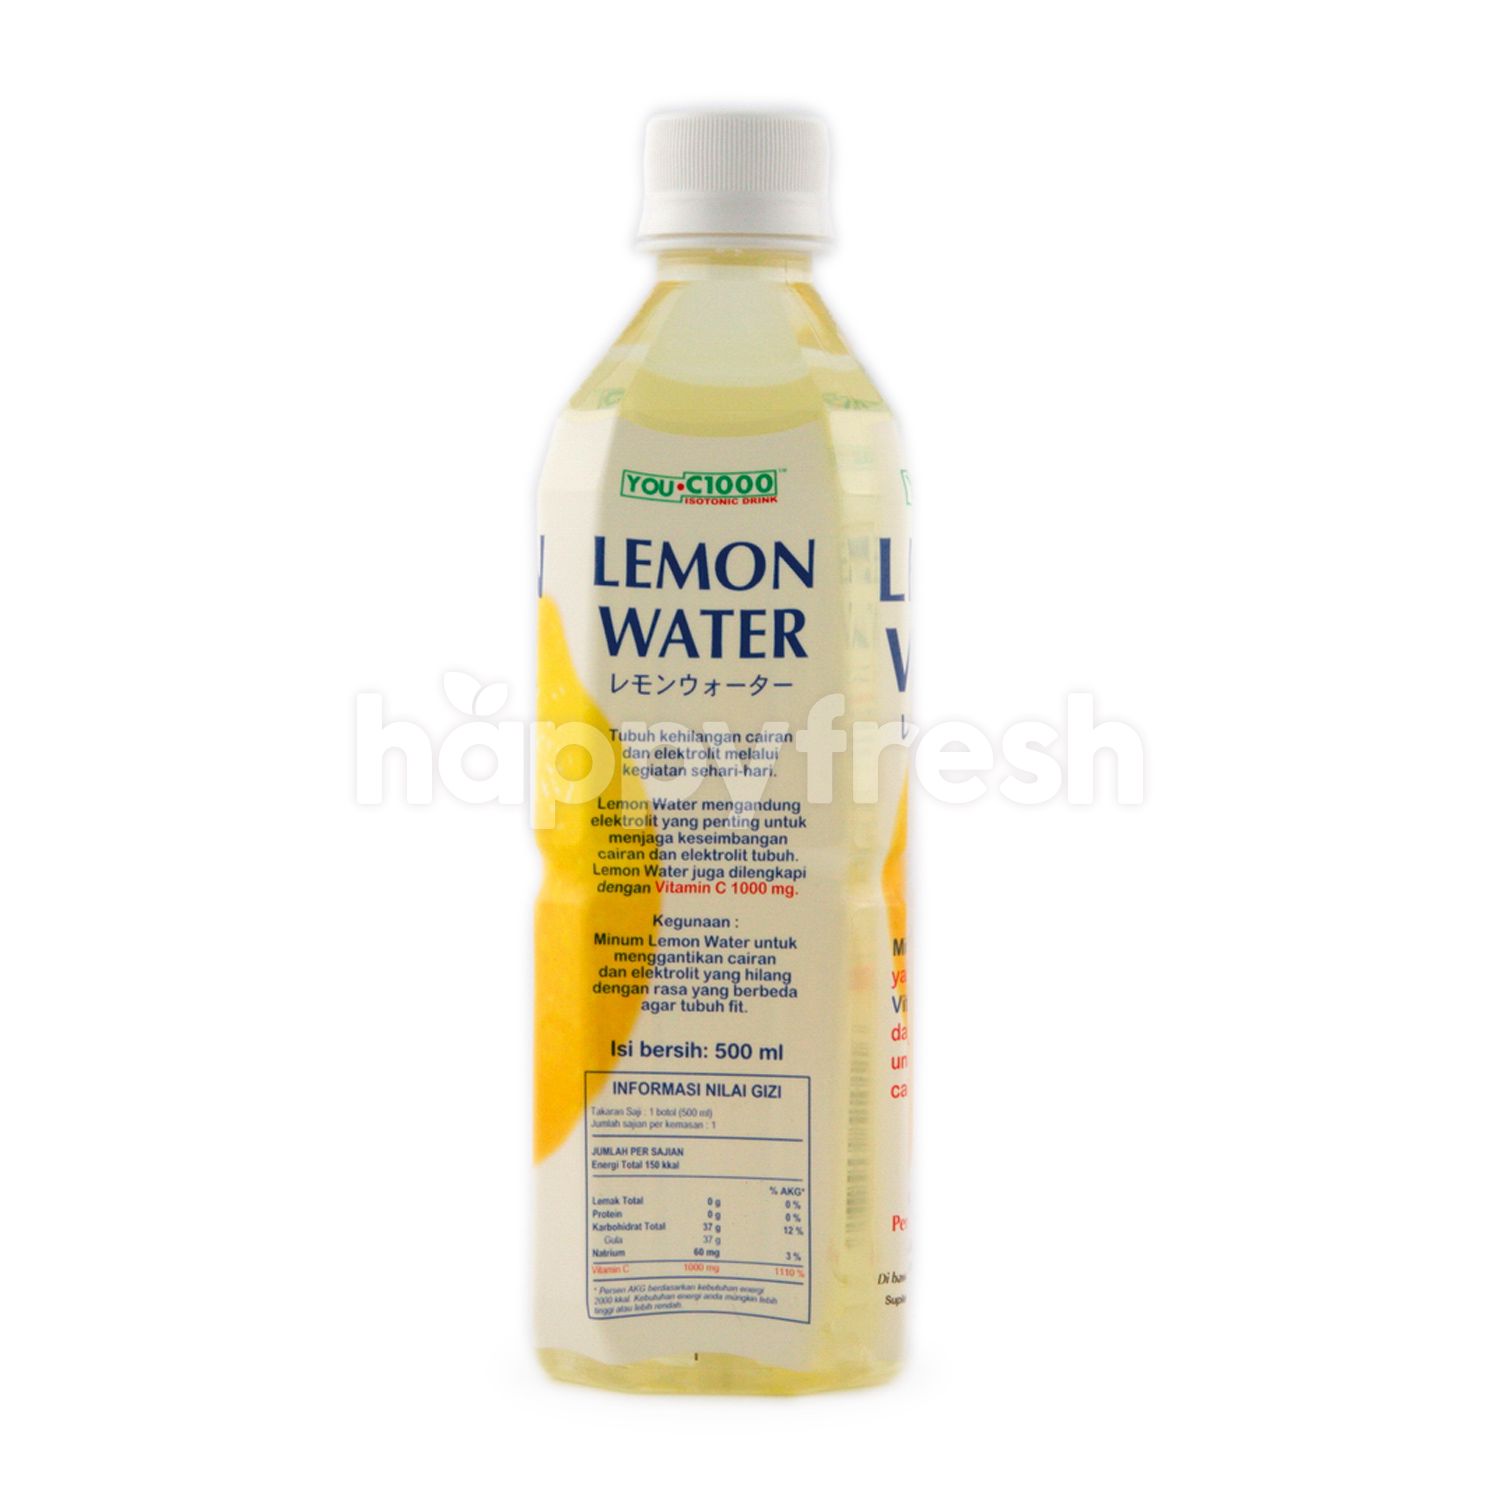 Jual You C1000 Lemon Water Isotonic Drink Soda Tonic Water Di Farmers Market Happyfresh